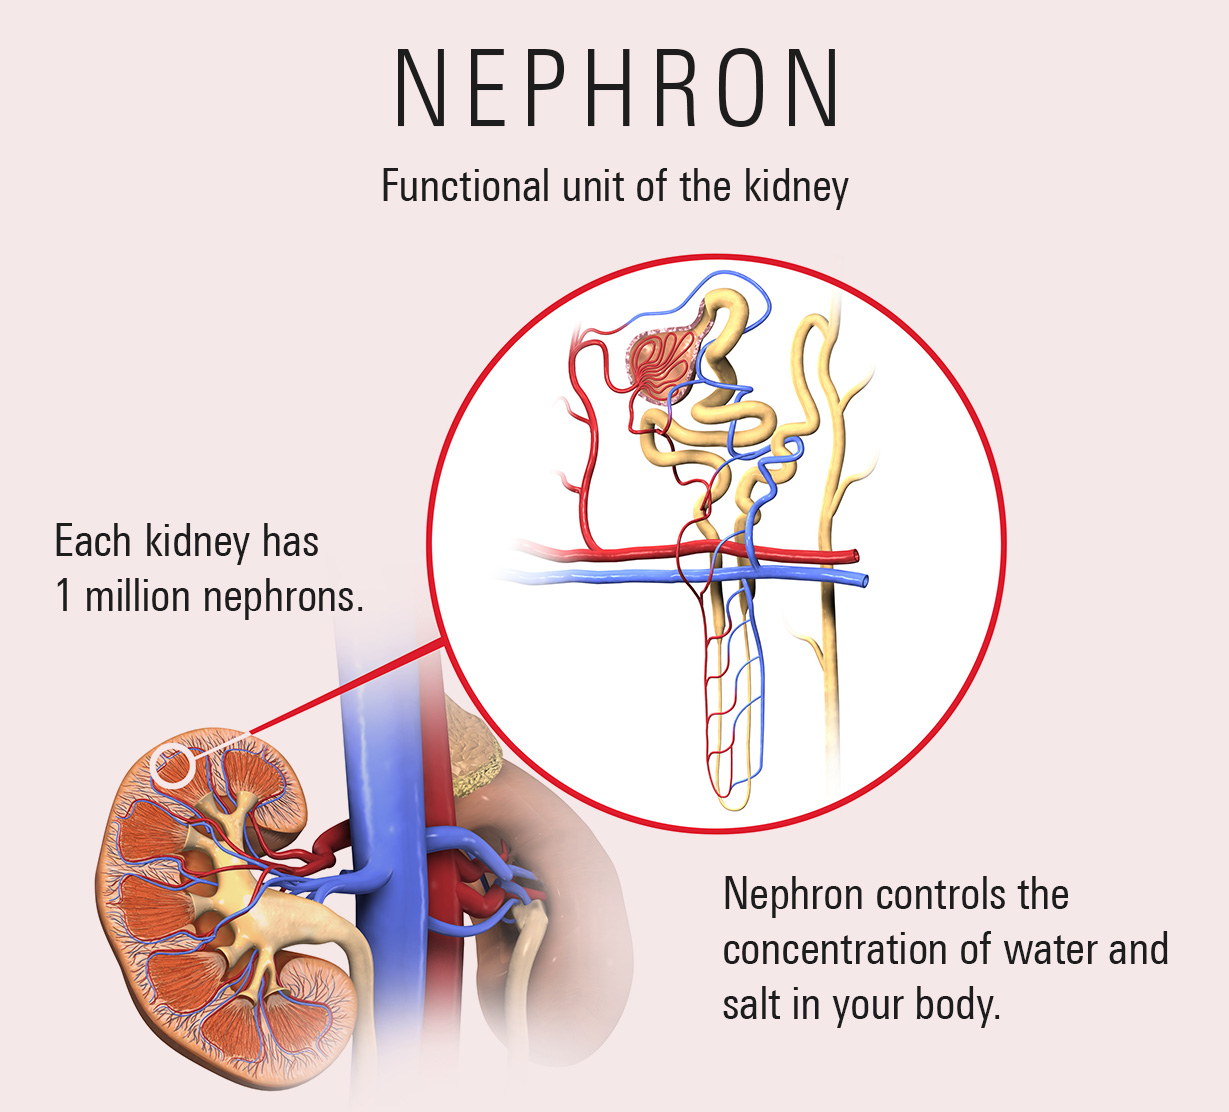 The nephron